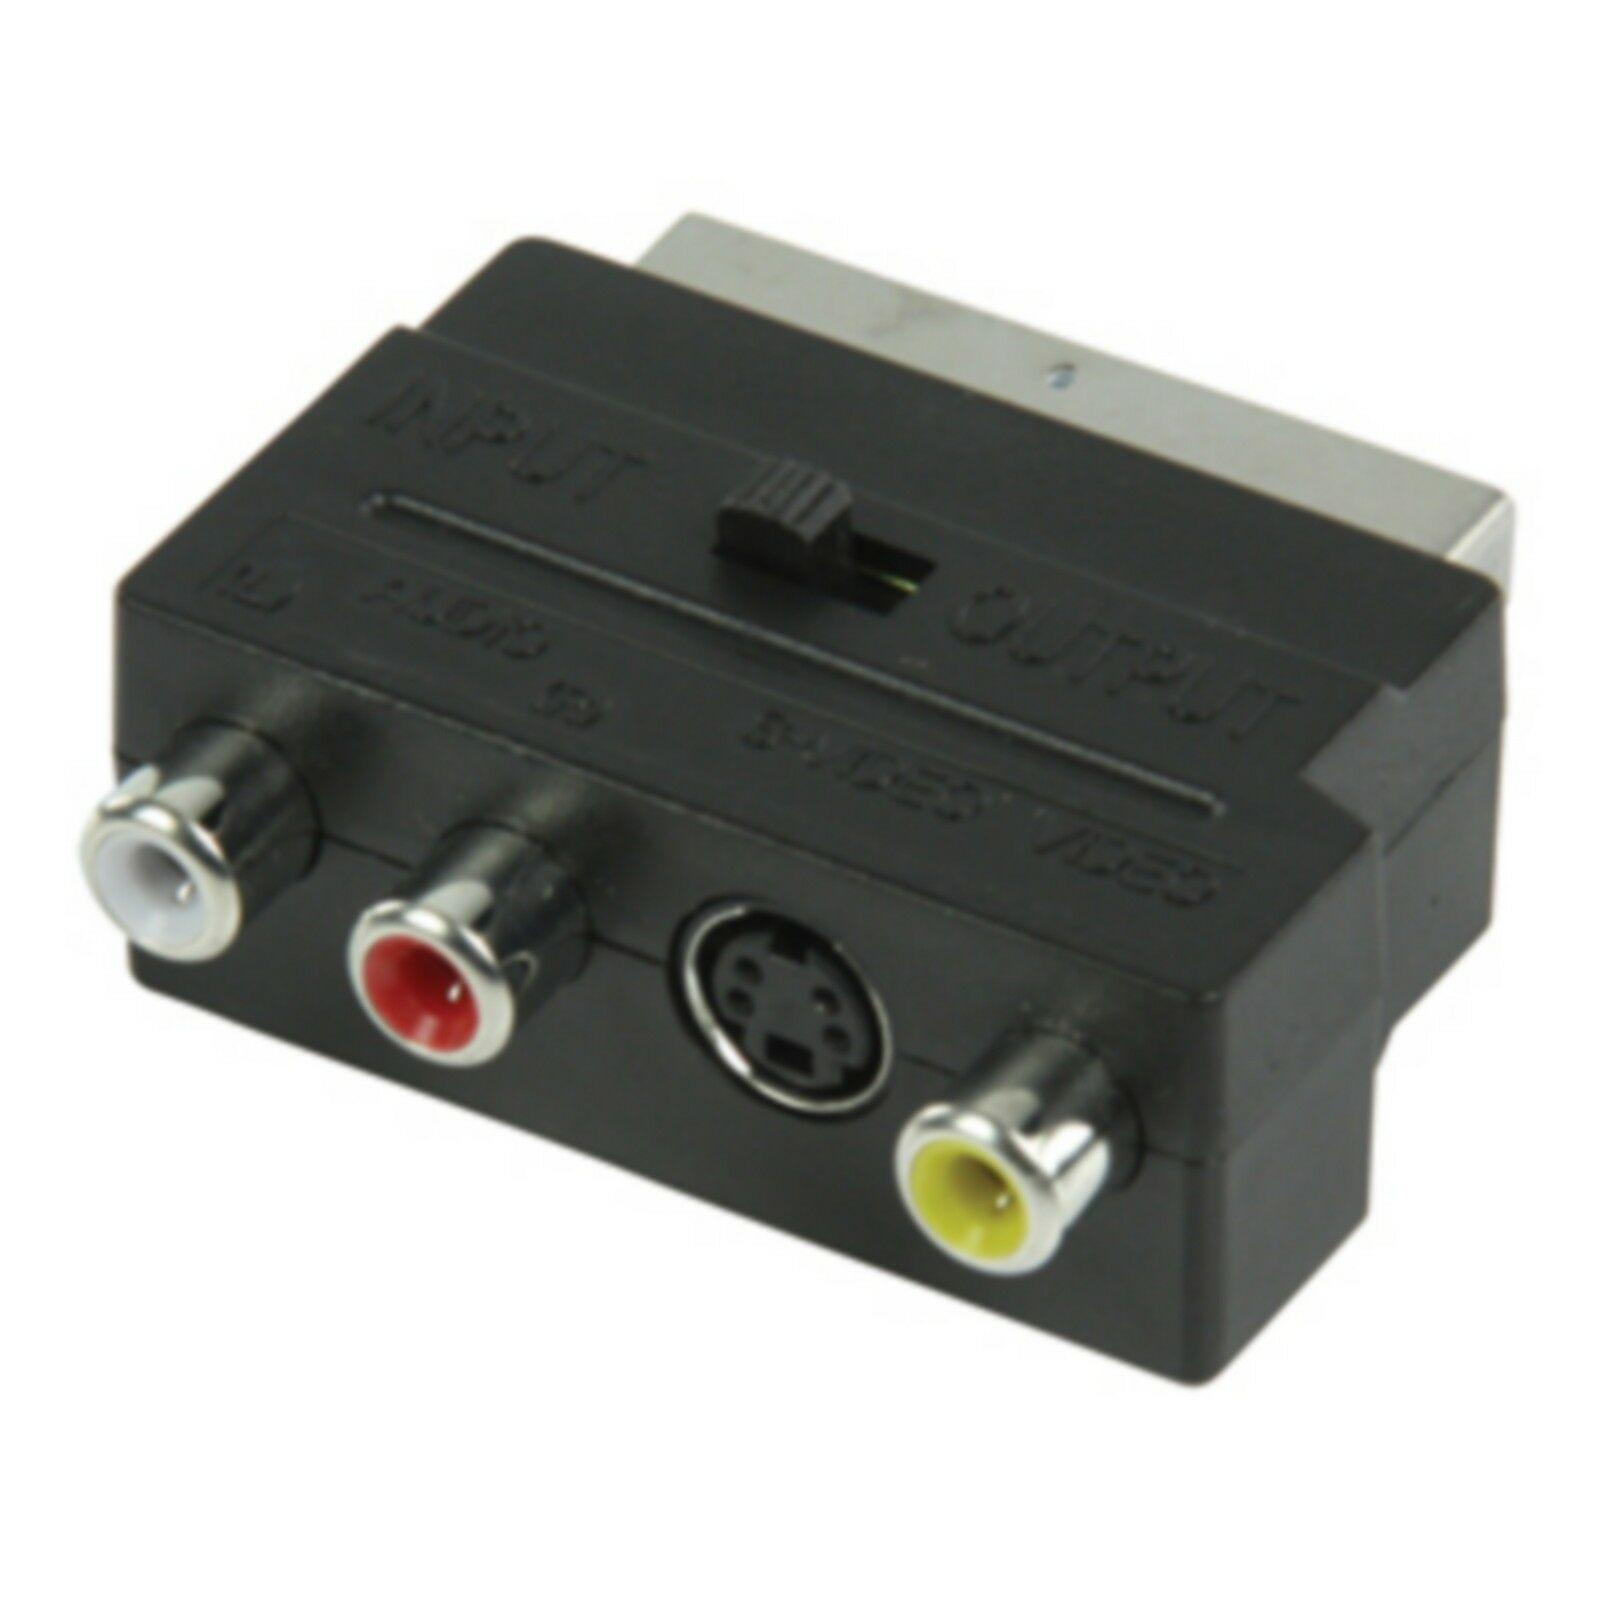 Ineck - INECK® péritel vers Composite RCA S-vhs Audio AV